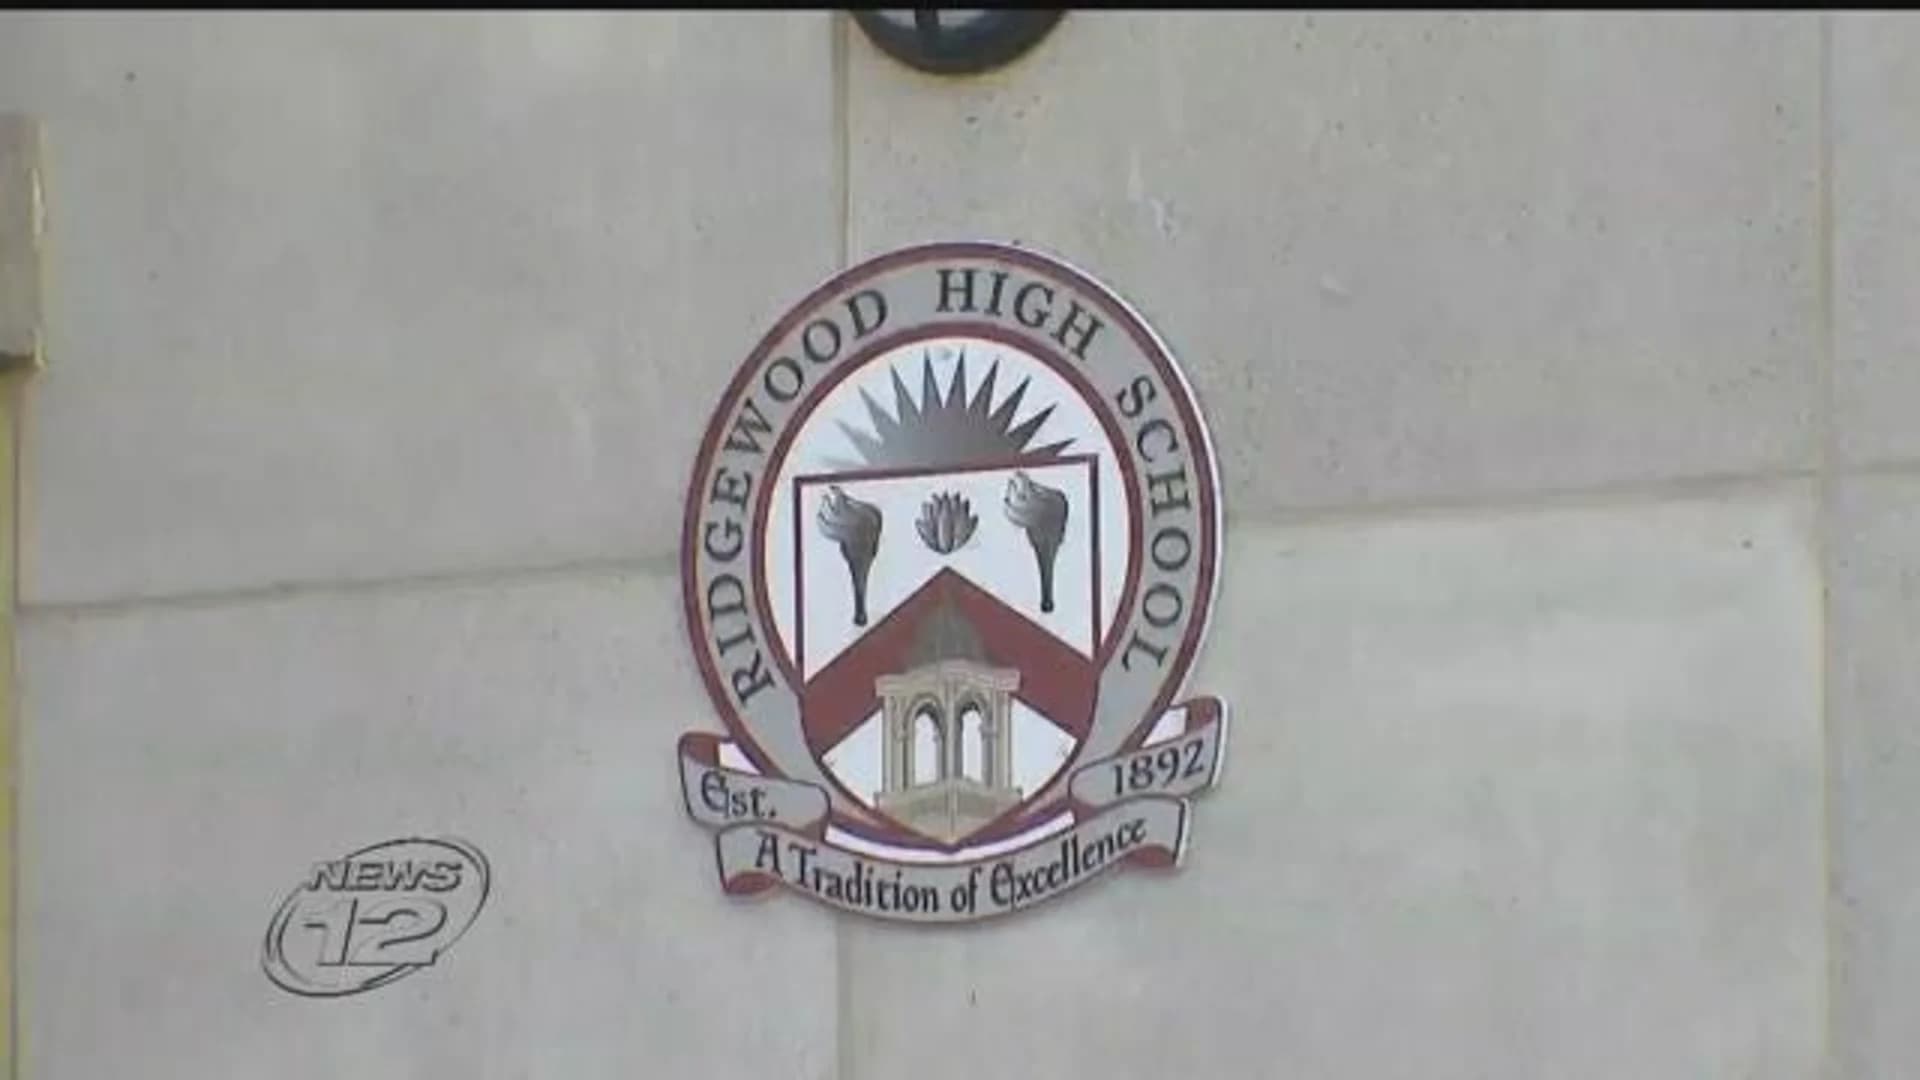 Report: Parents file lawsuit against Ridgewood school after fight